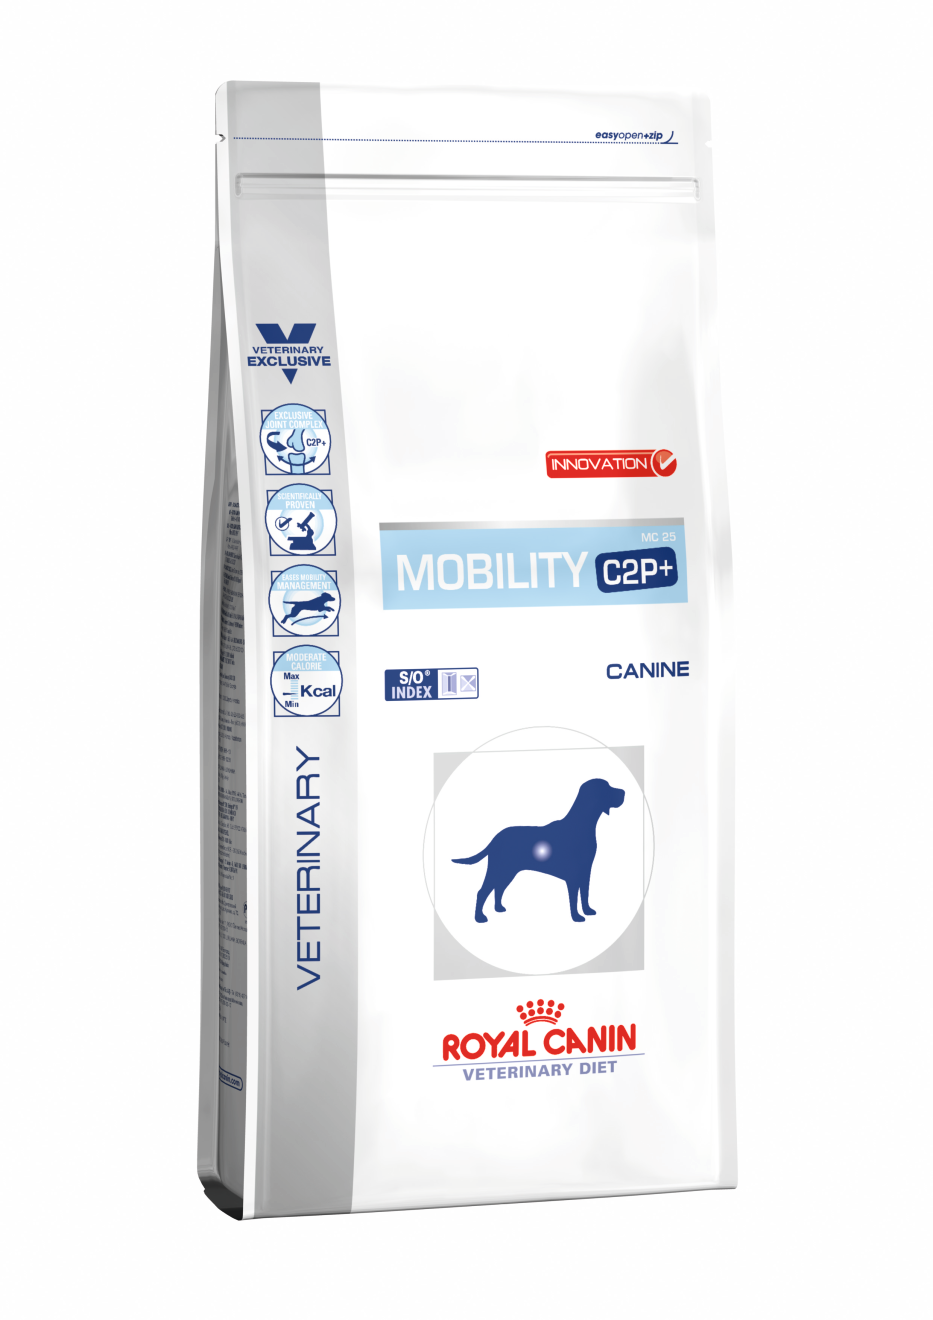 royal canin hypoallergenic medium dog